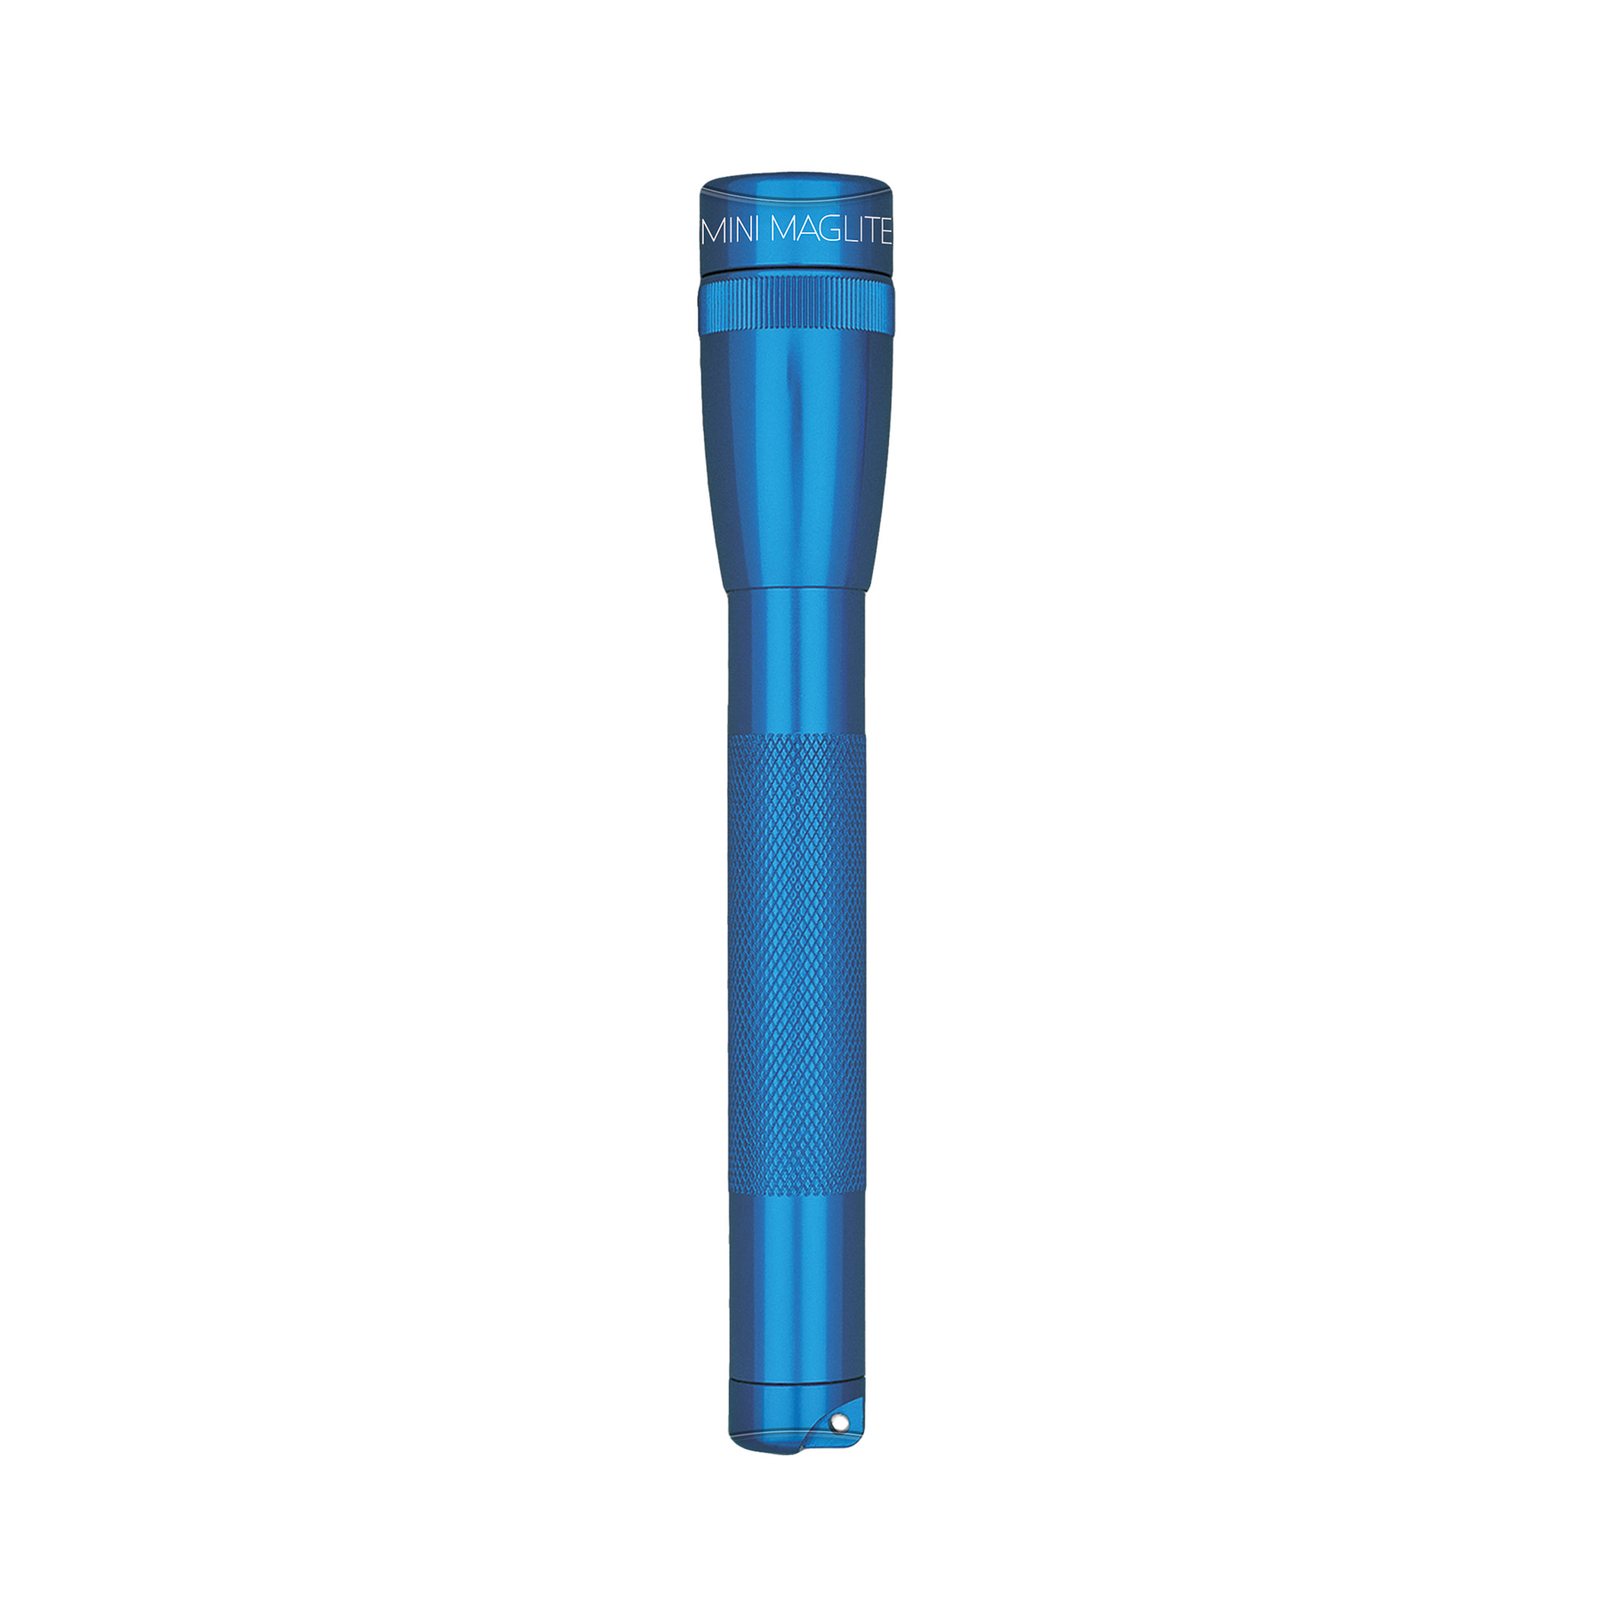 Torcia a LED Maglite Mini, 2 Cell AA, fondina, blu